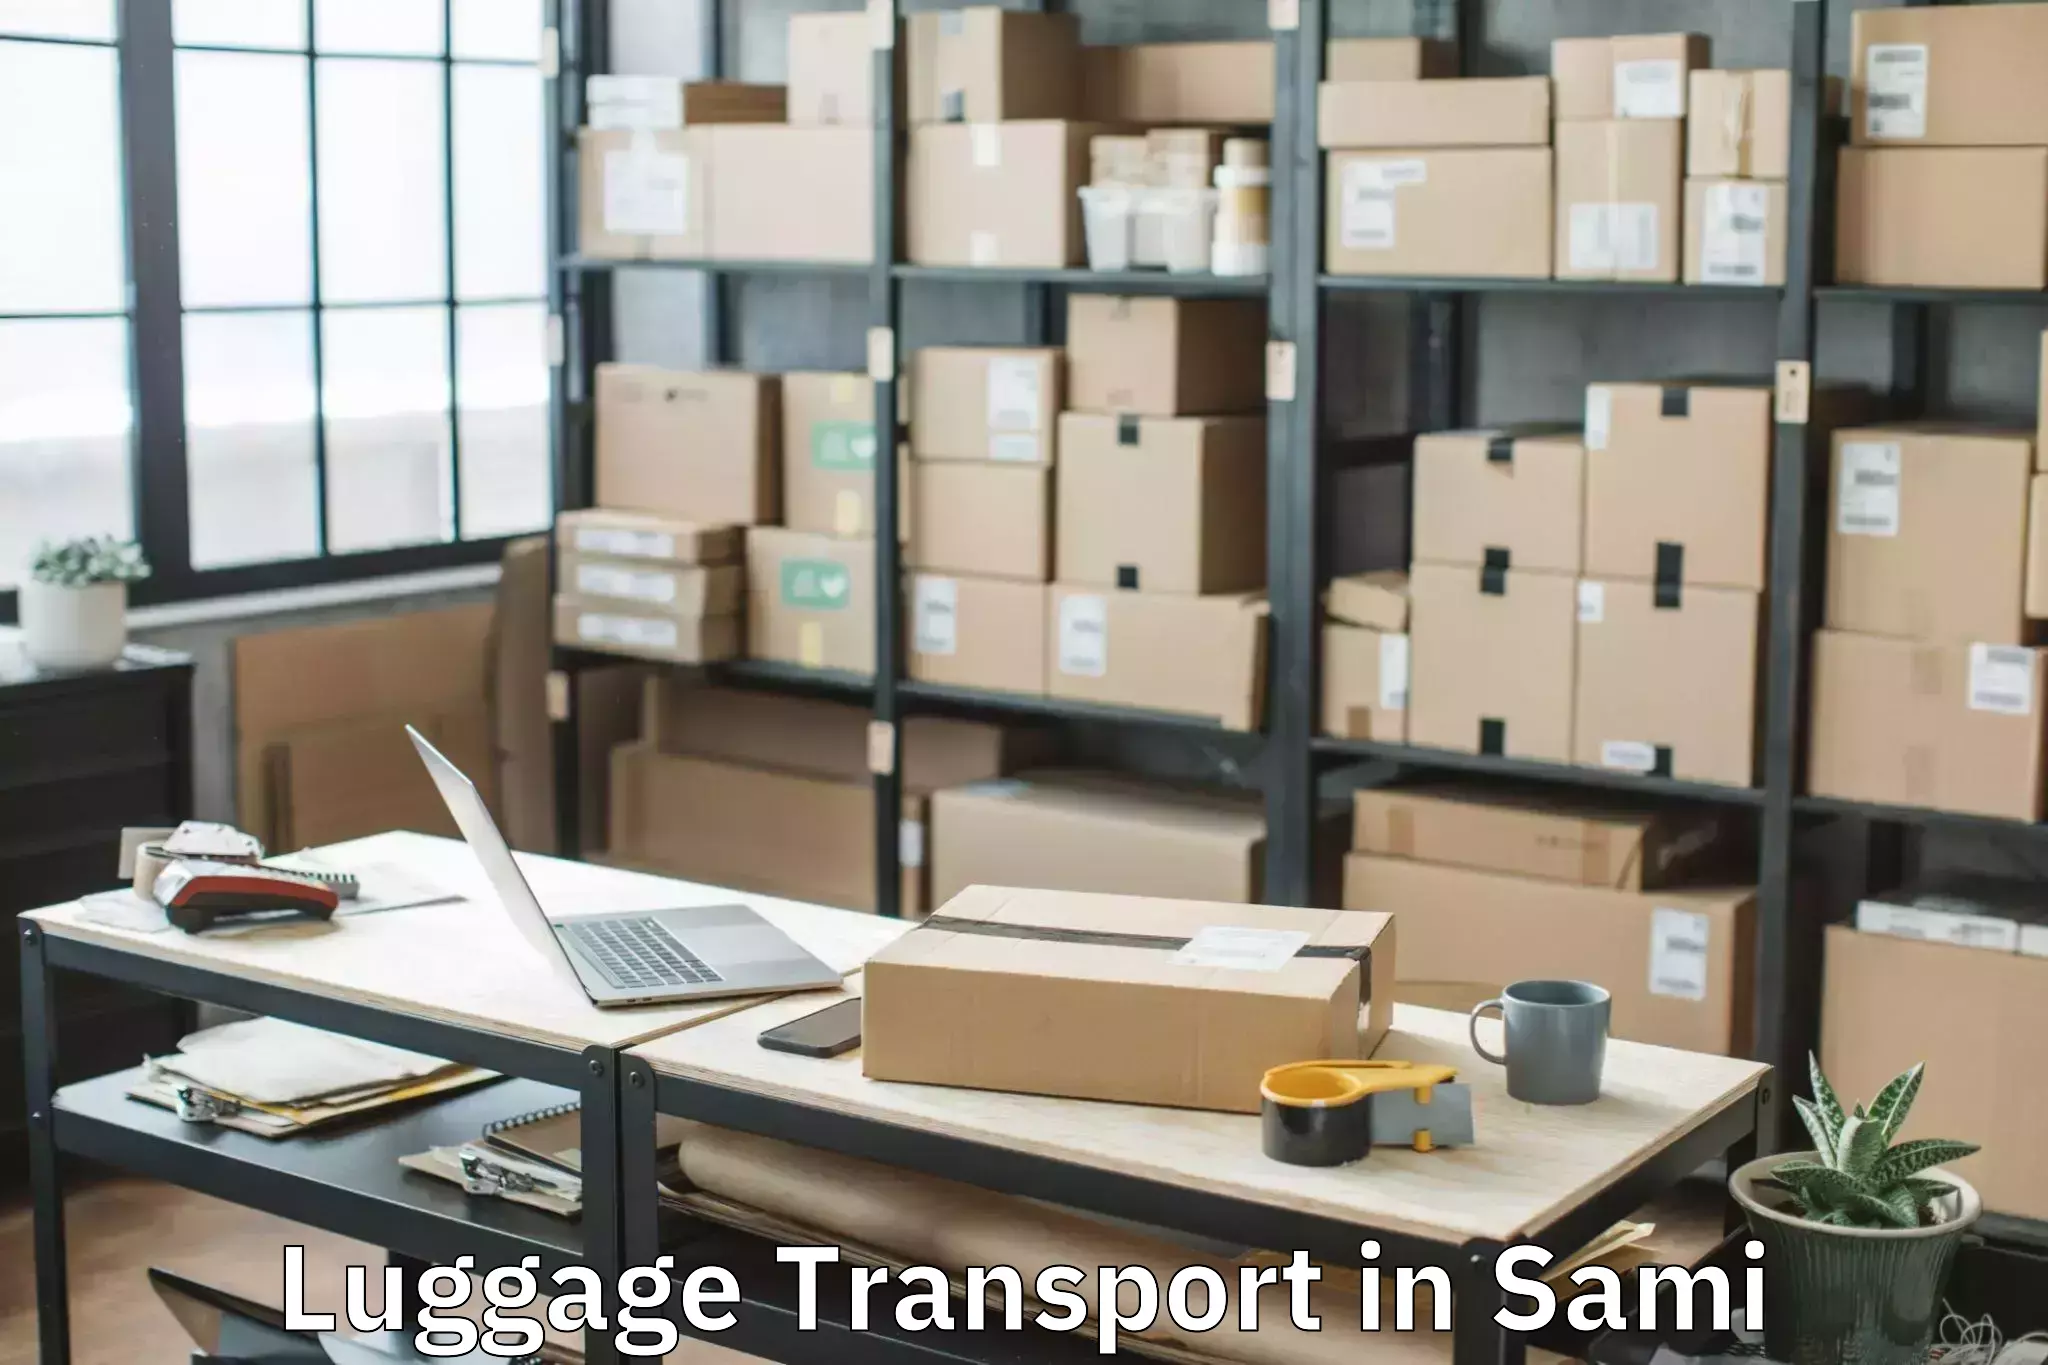 Luggage shipment tracking in Sami